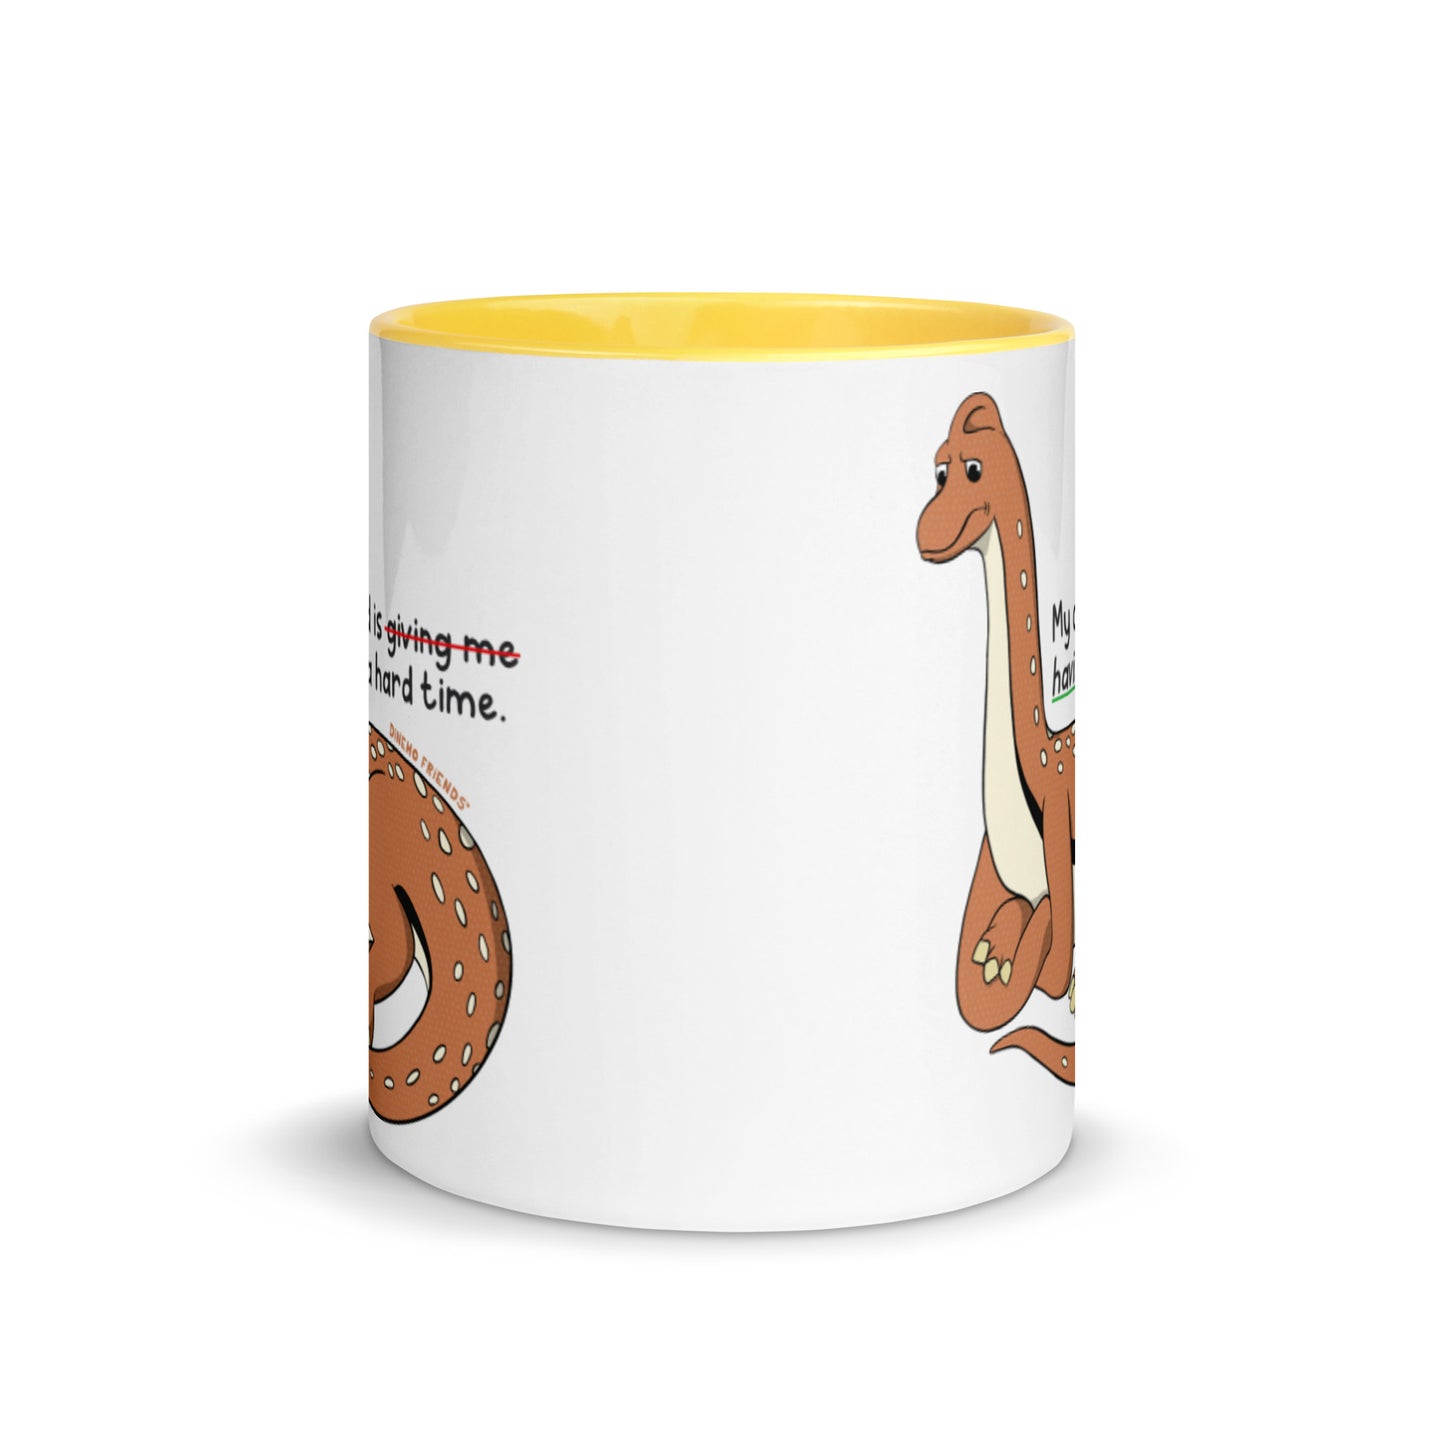 Disappointed Dino Mug